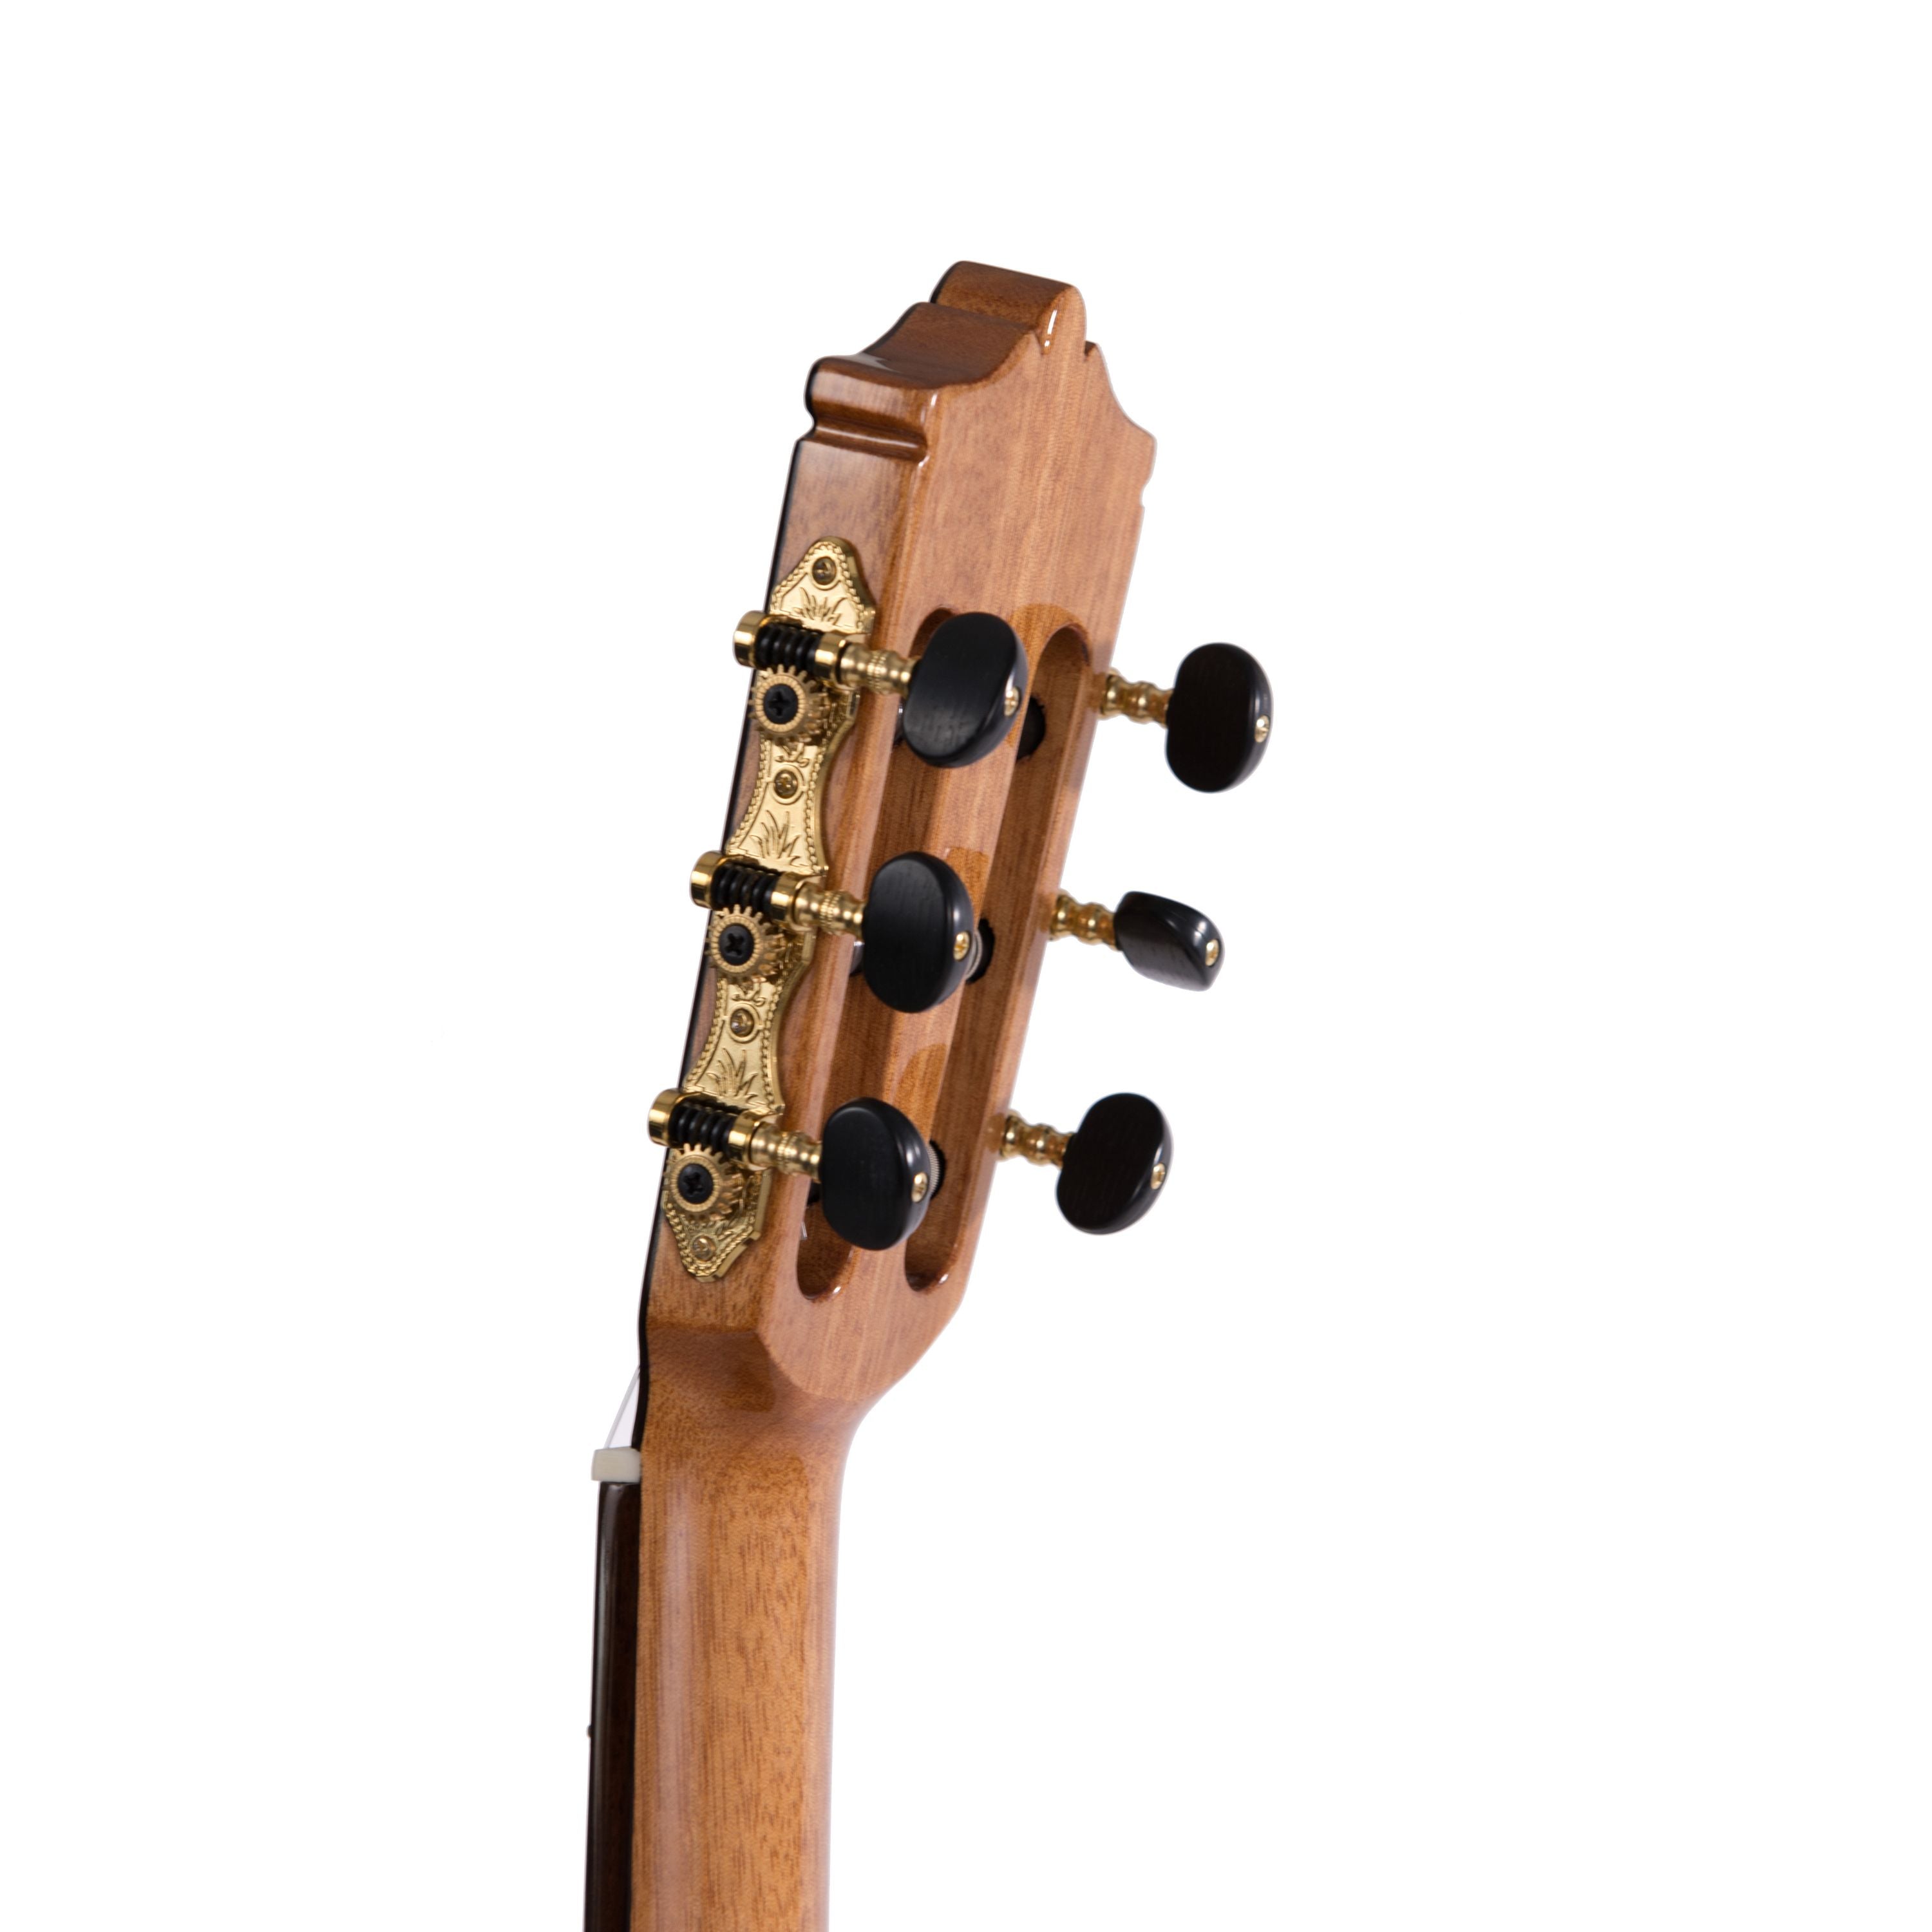 Katoh MCG20 Full-Size Student Classical Guitar